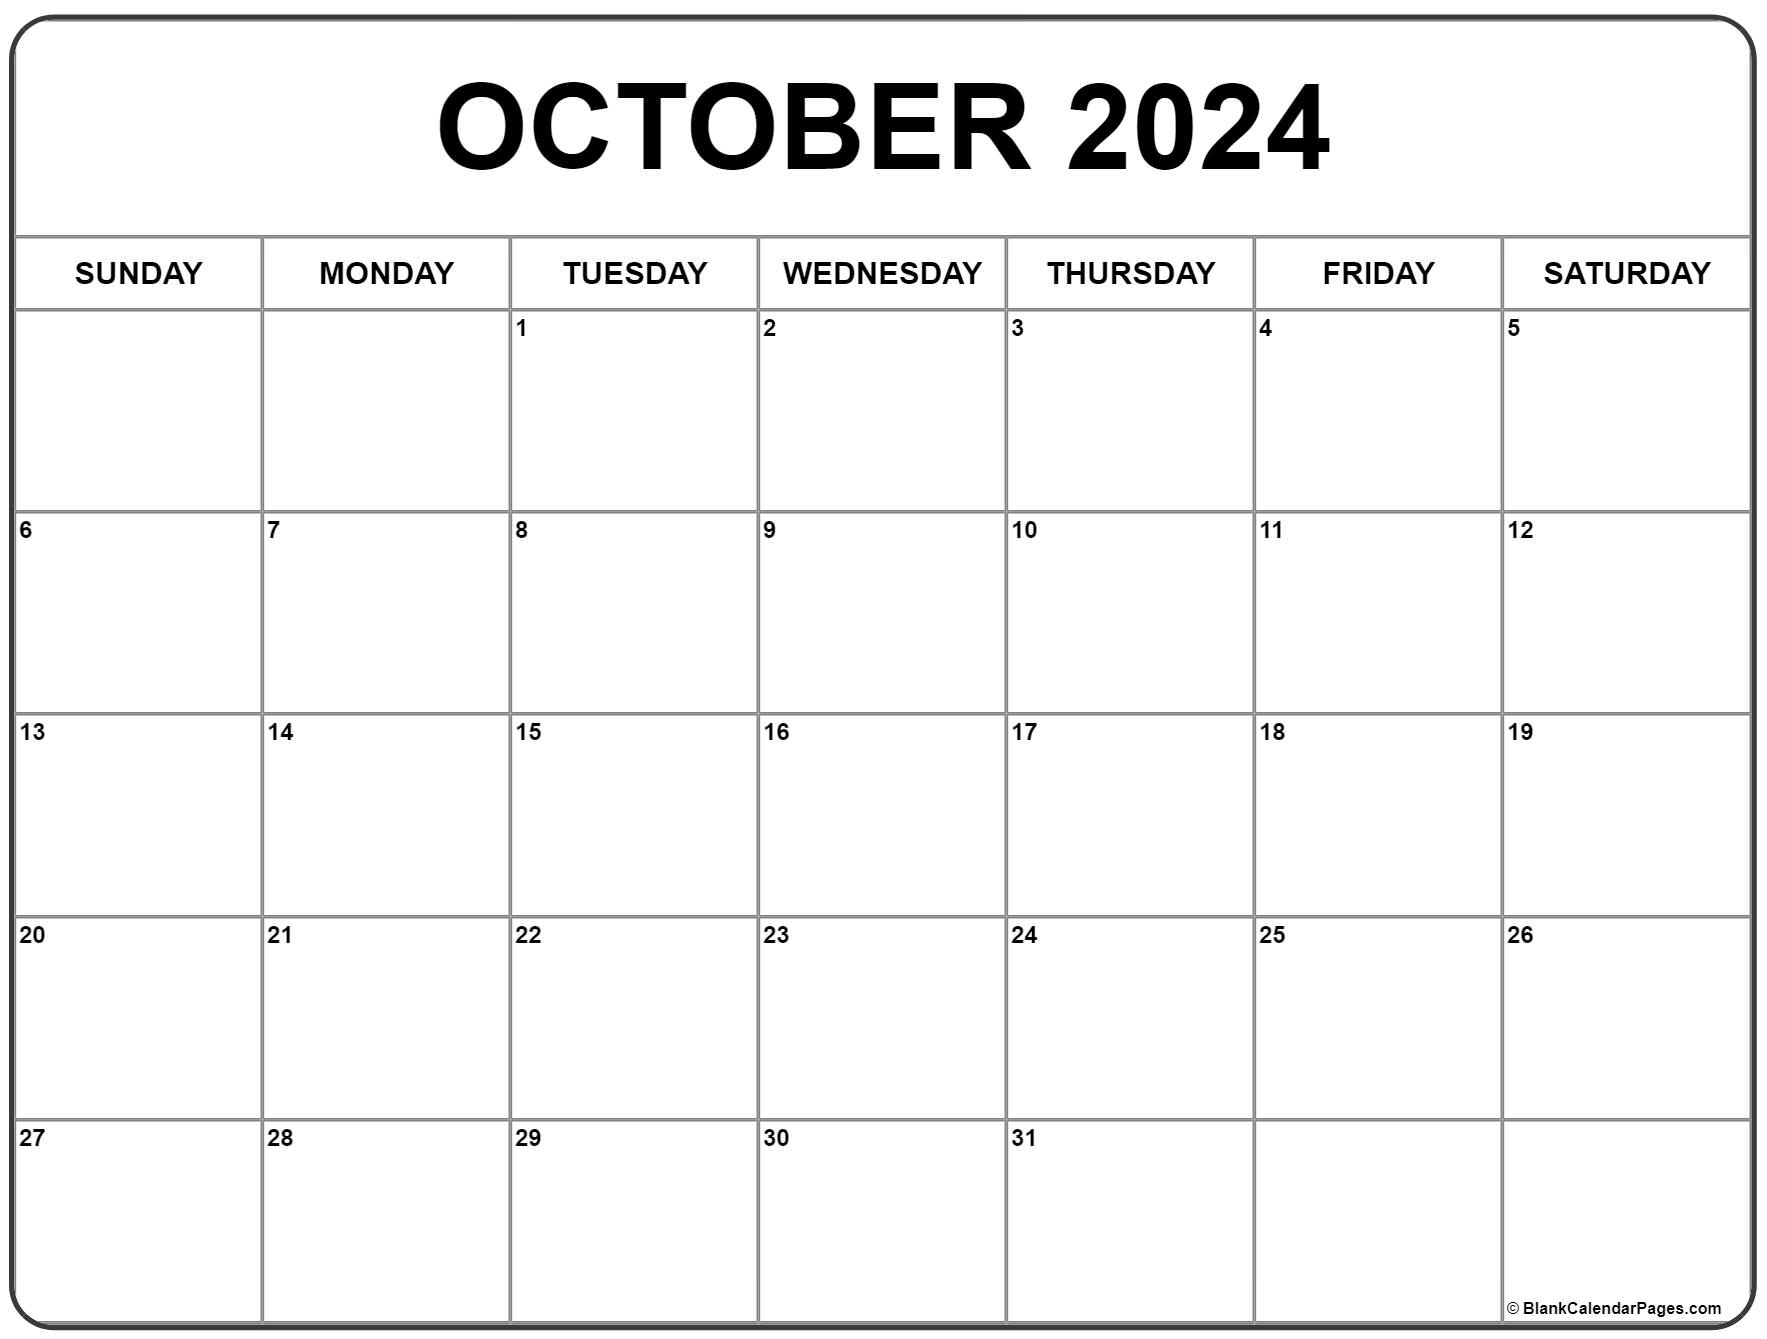 October 2024 Calendar | Free Printable Calendar for October 2024 Free Printable Calendar